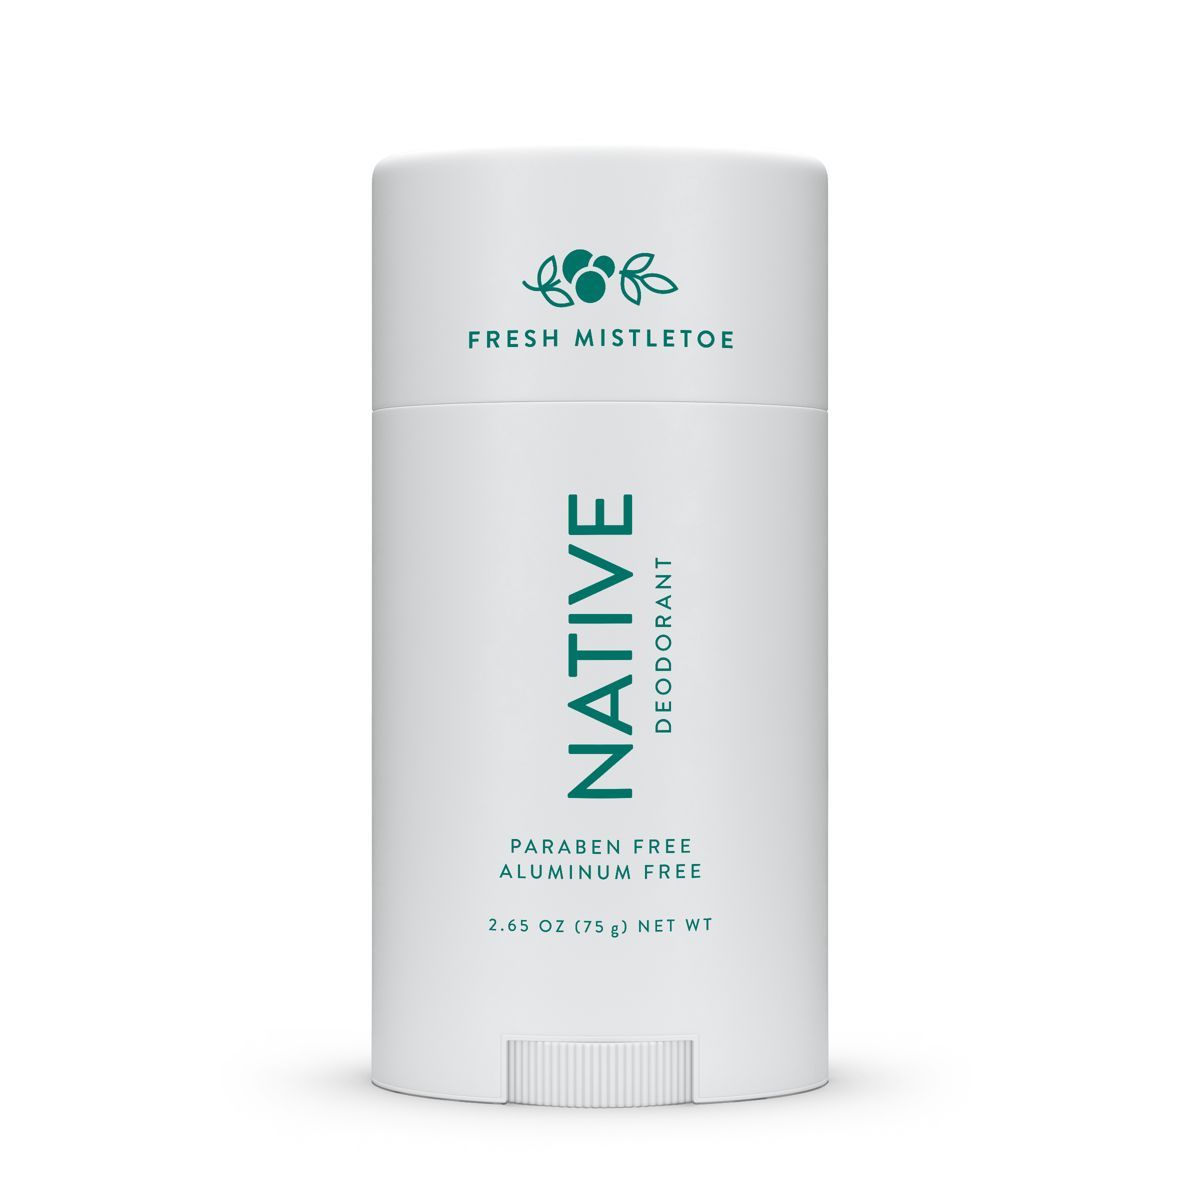 Native Deodorant - Limited Edition Holiday - Fresh Mistletoe - Aluminum Free - 2.65 oz | Target